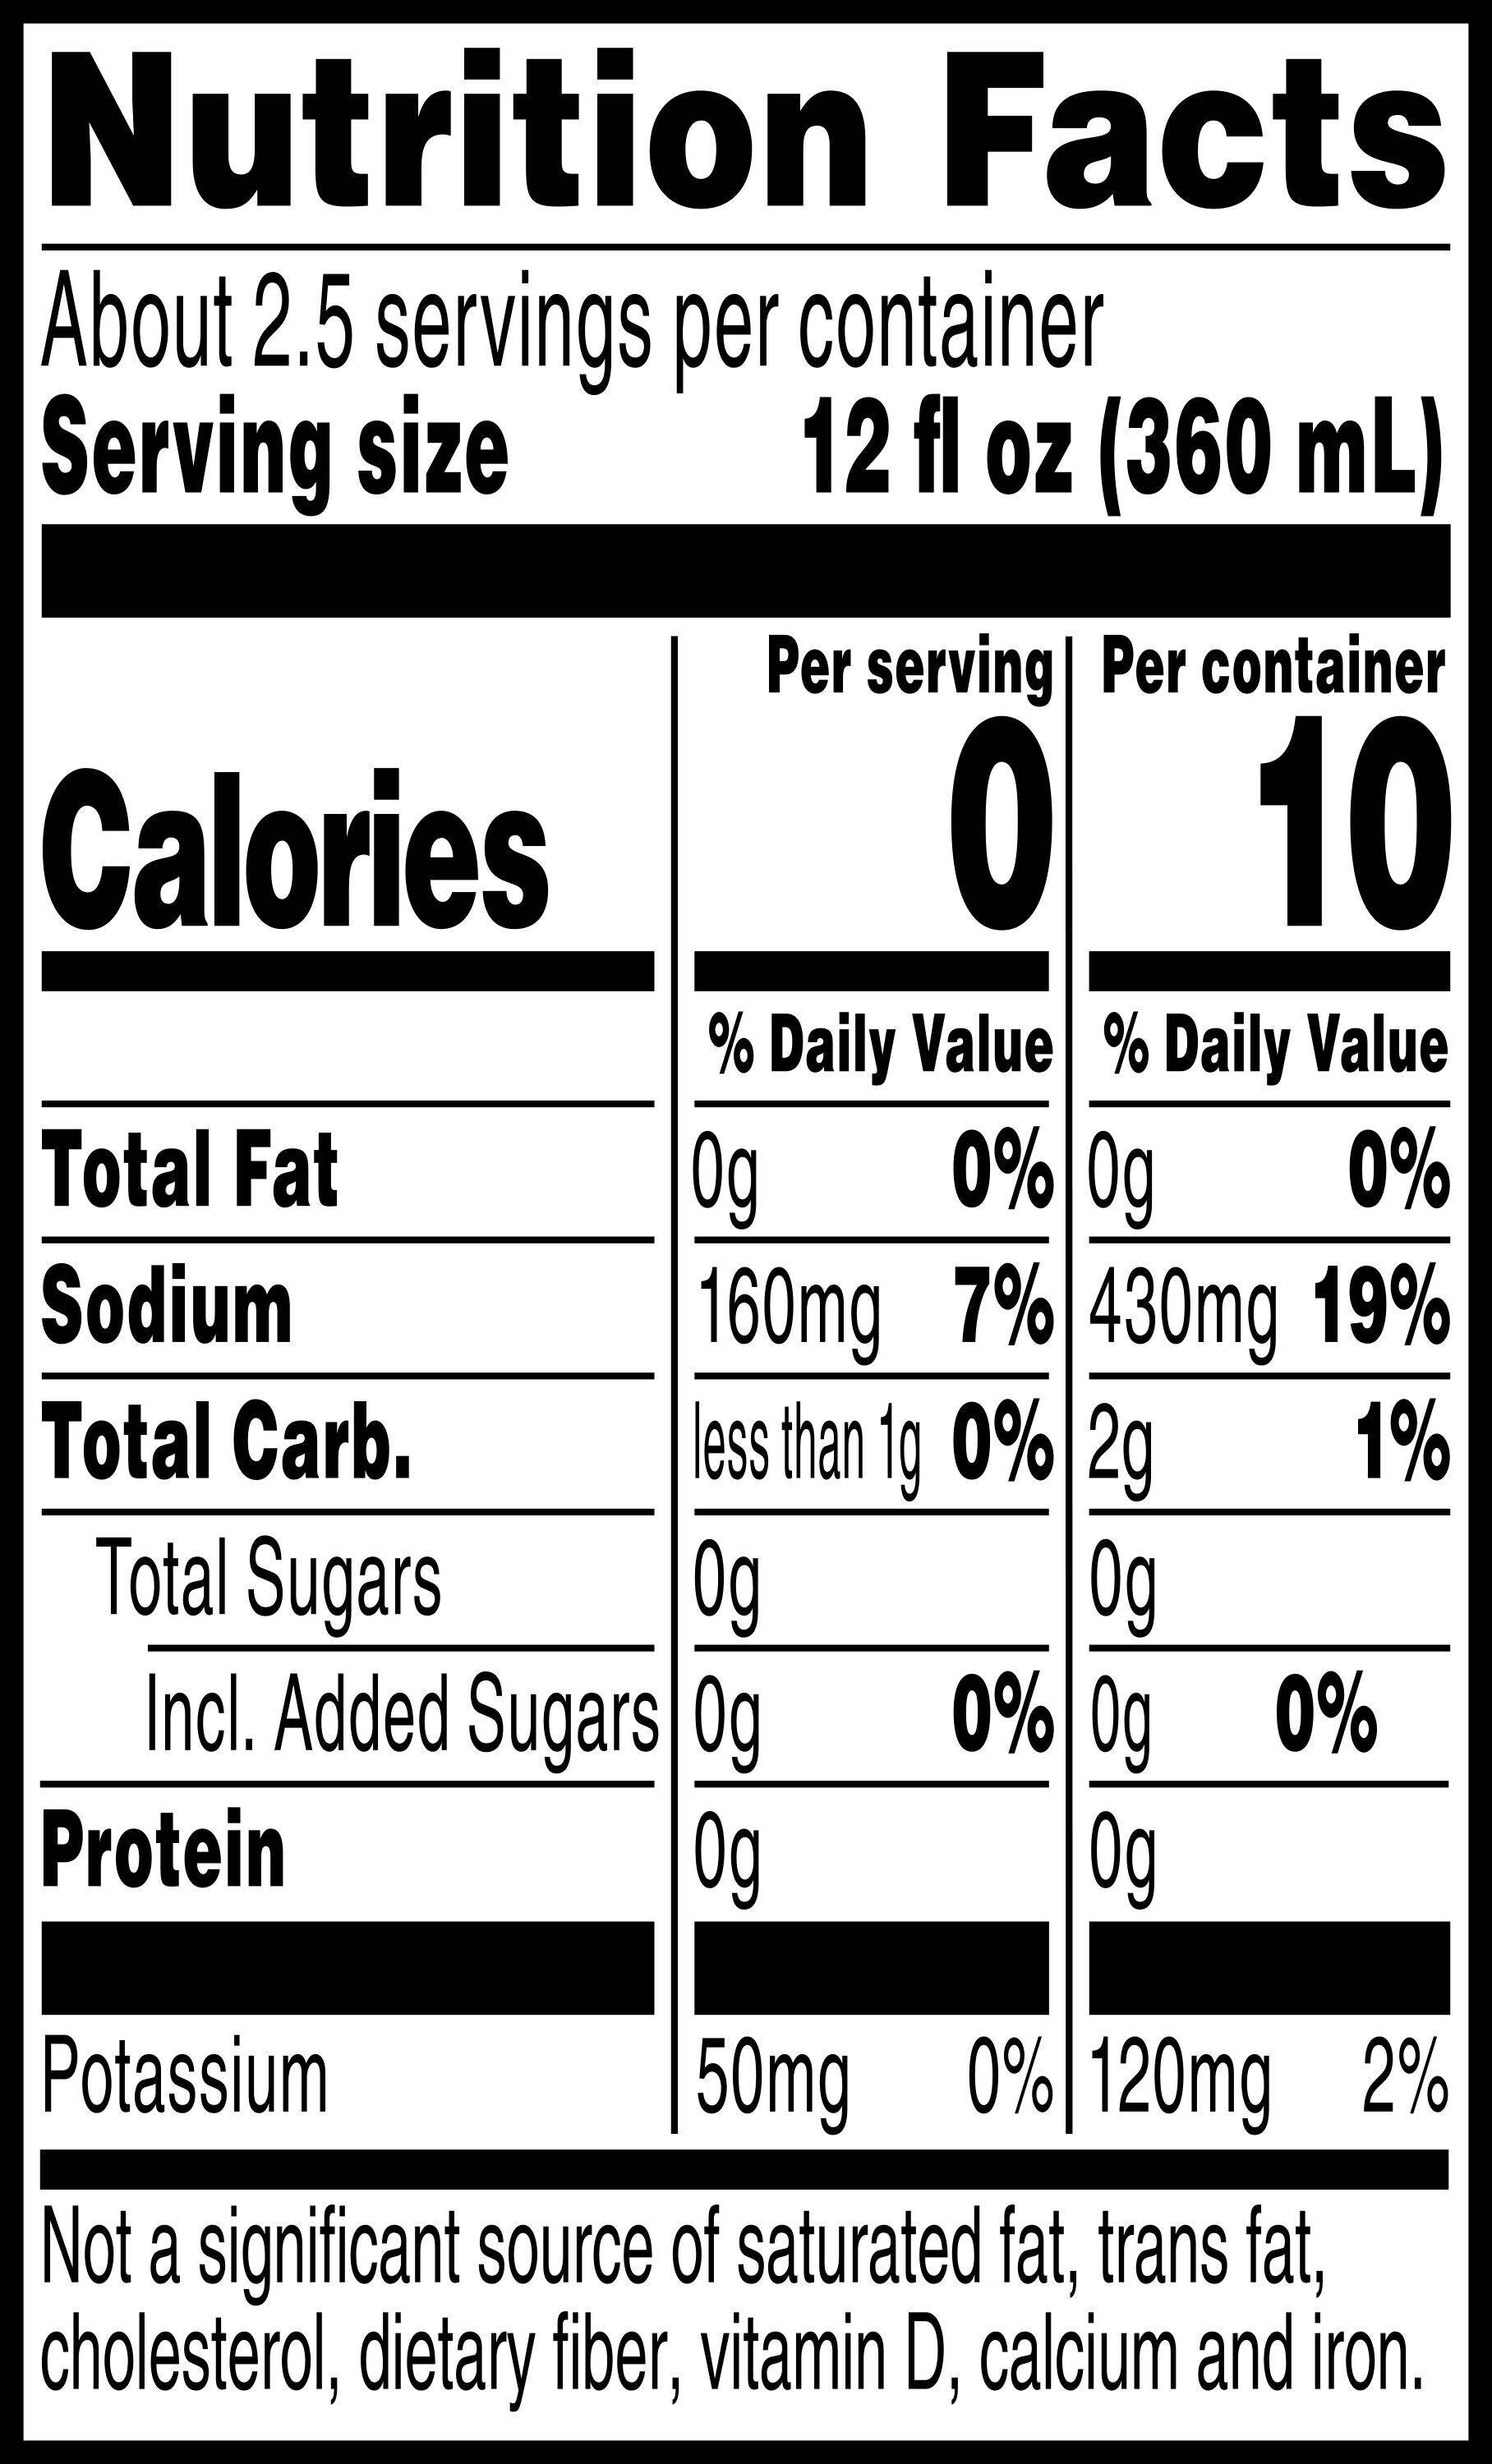 Image describing nutrition information for product Gatorade Zero Lemon Lime